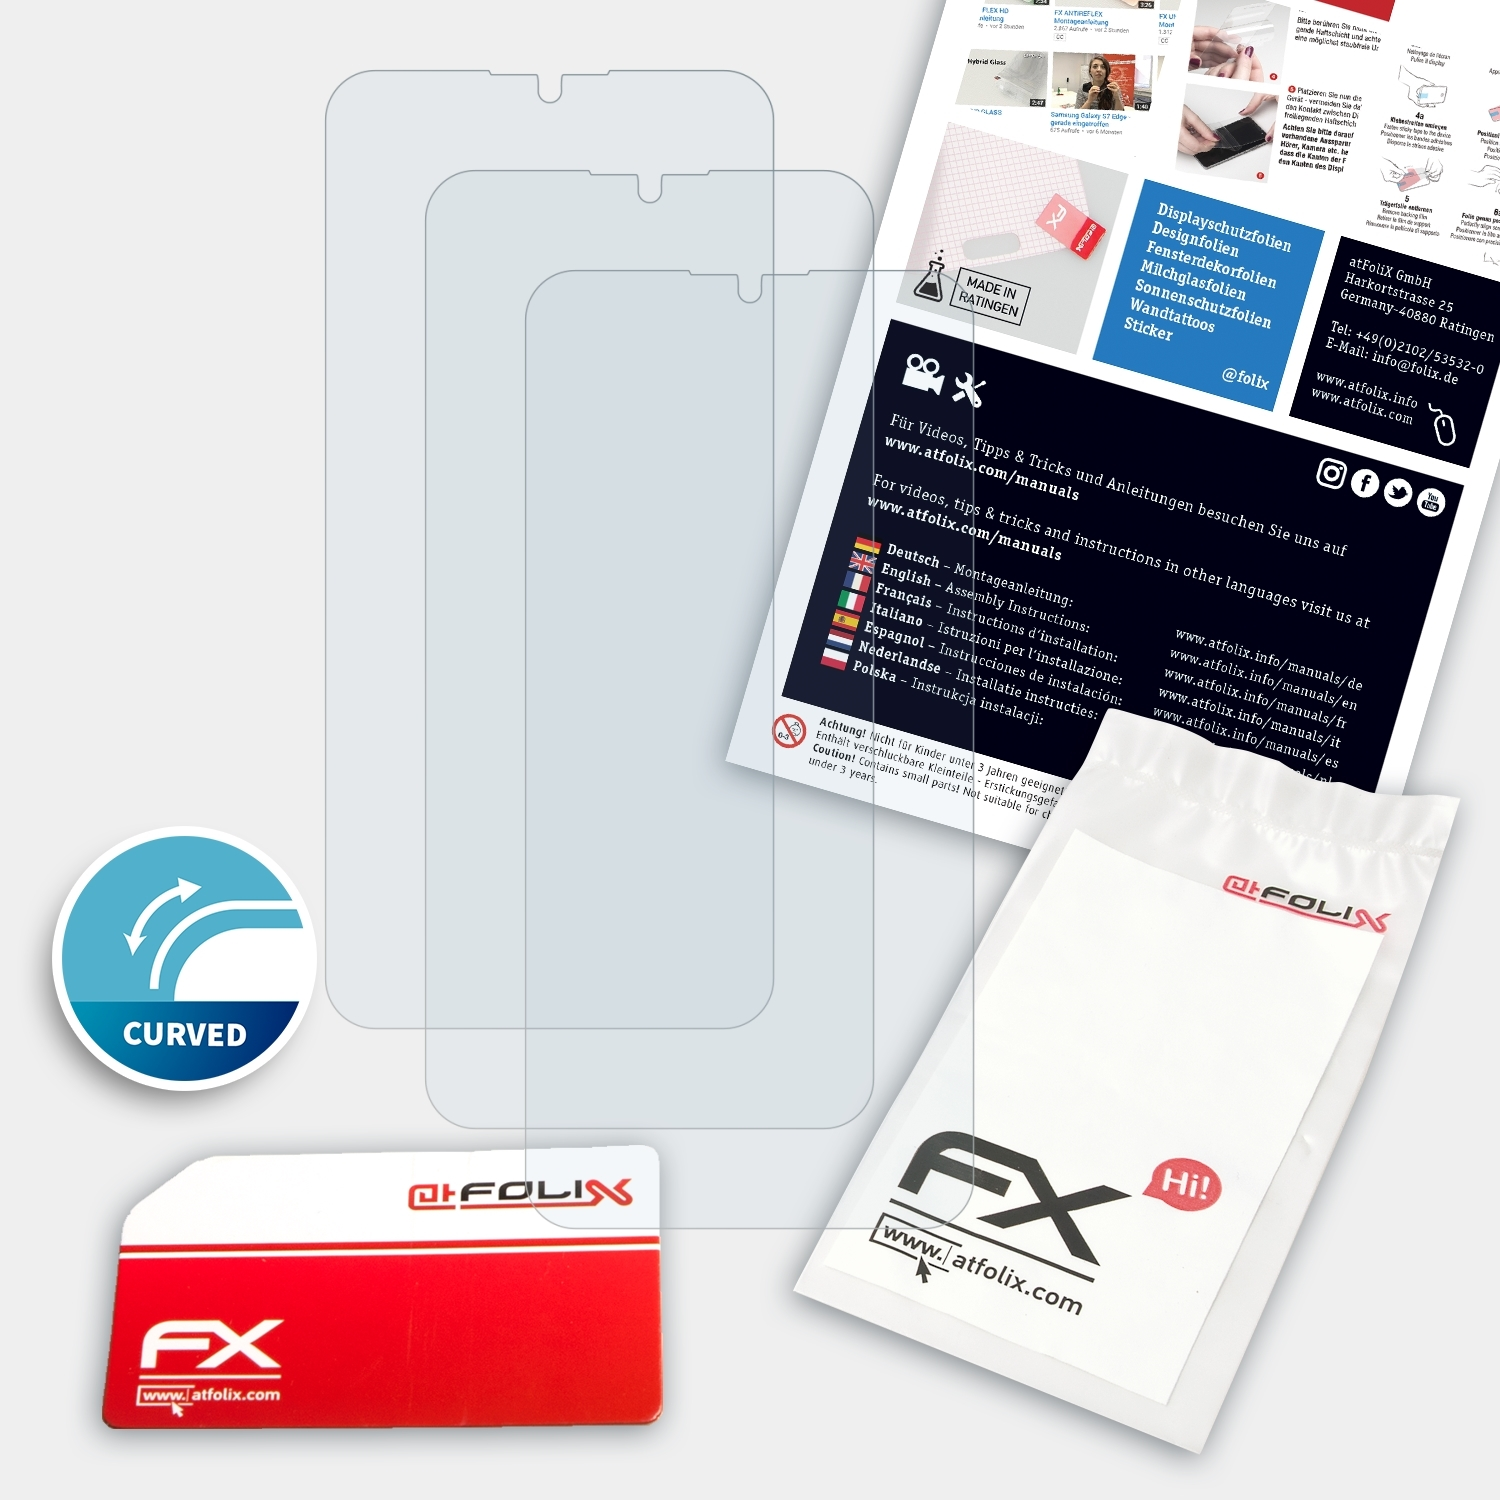 Displayschutz(für 3) Smartisan Pro ATFOLIX Nut 3x FX-ActiFleX